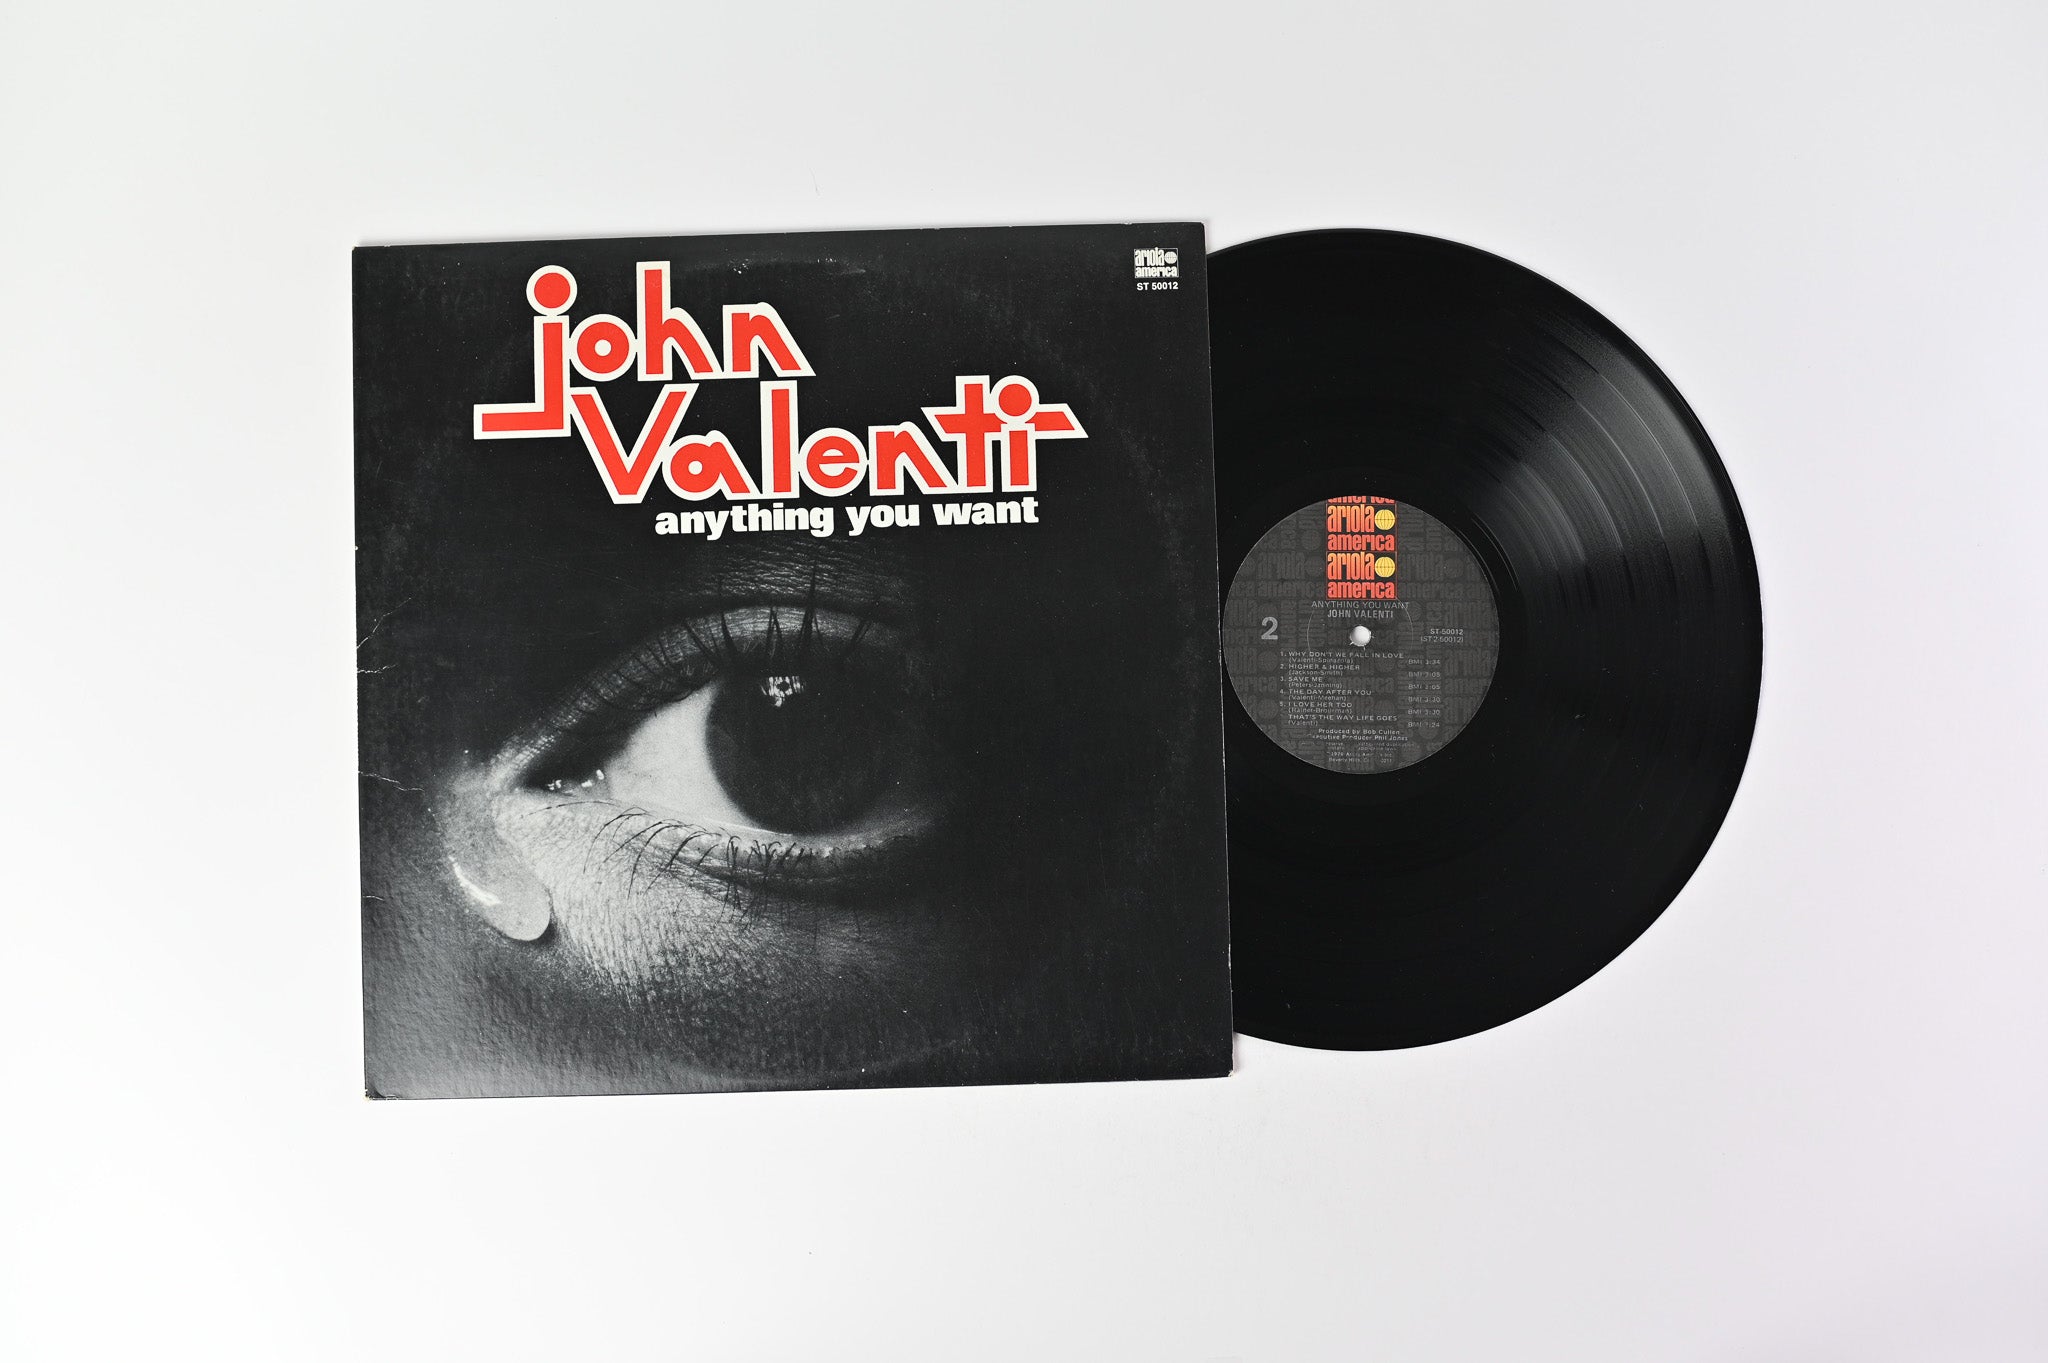 John Valenti - Anything You Want on Ariola America